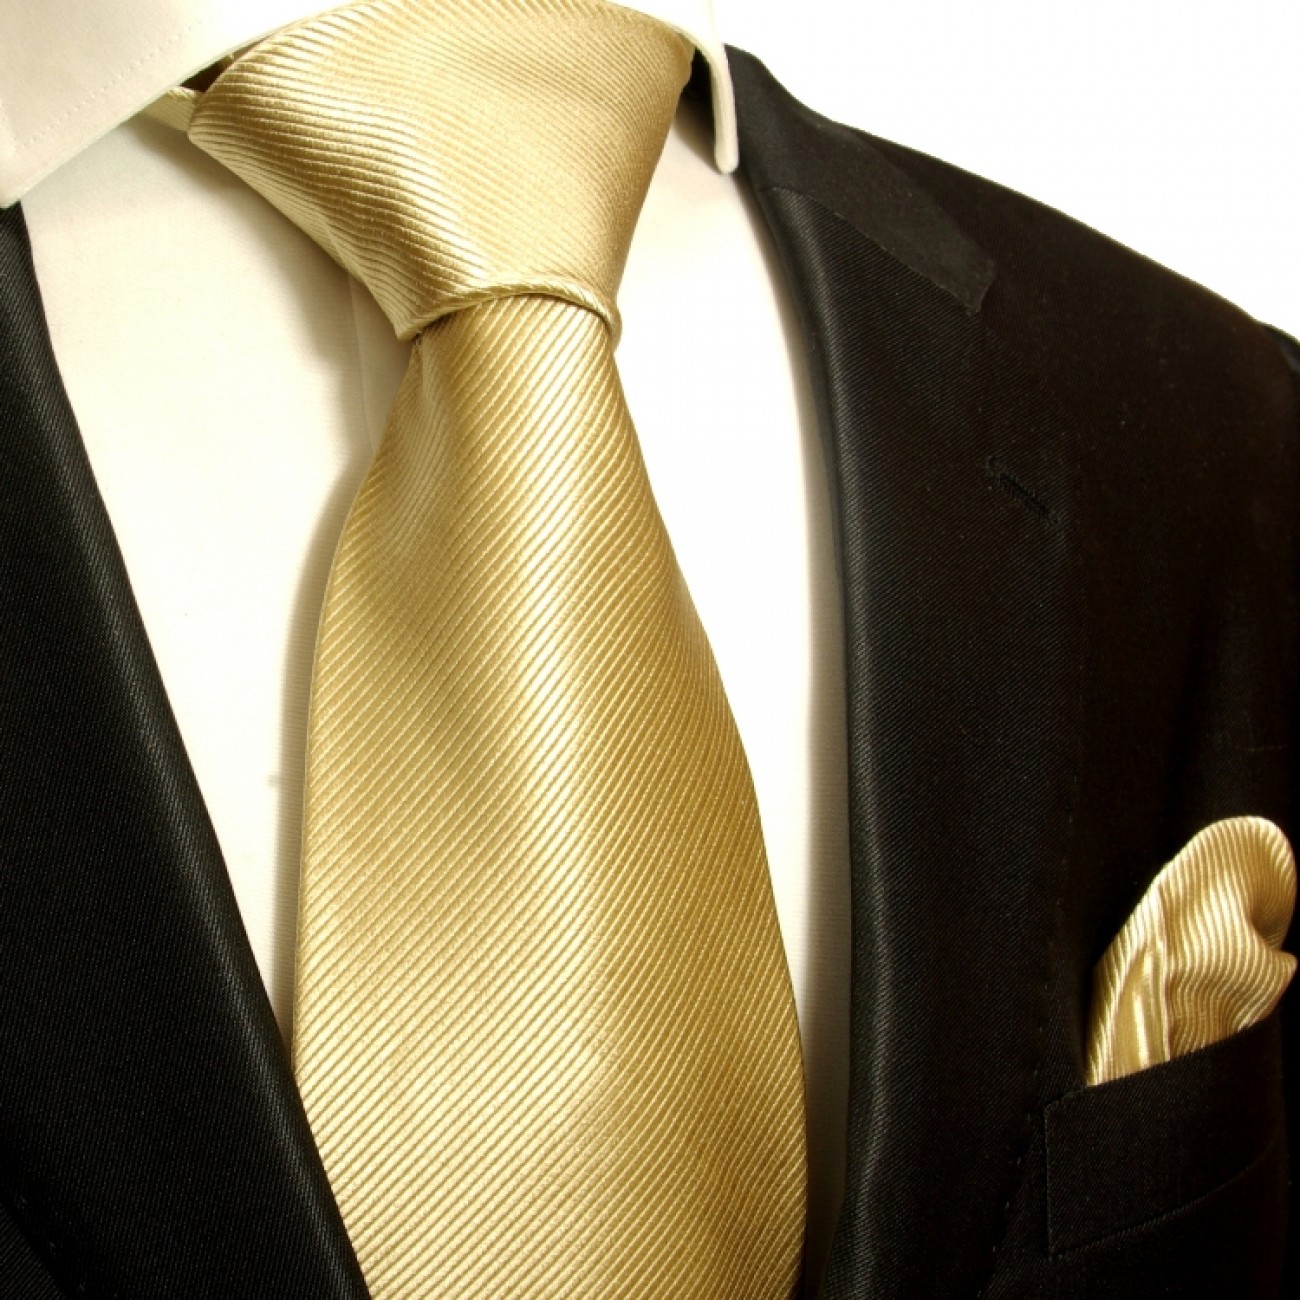 Gold tan necktie set 2pcs 100% silk tie + handkerchief by Paul Malone ...